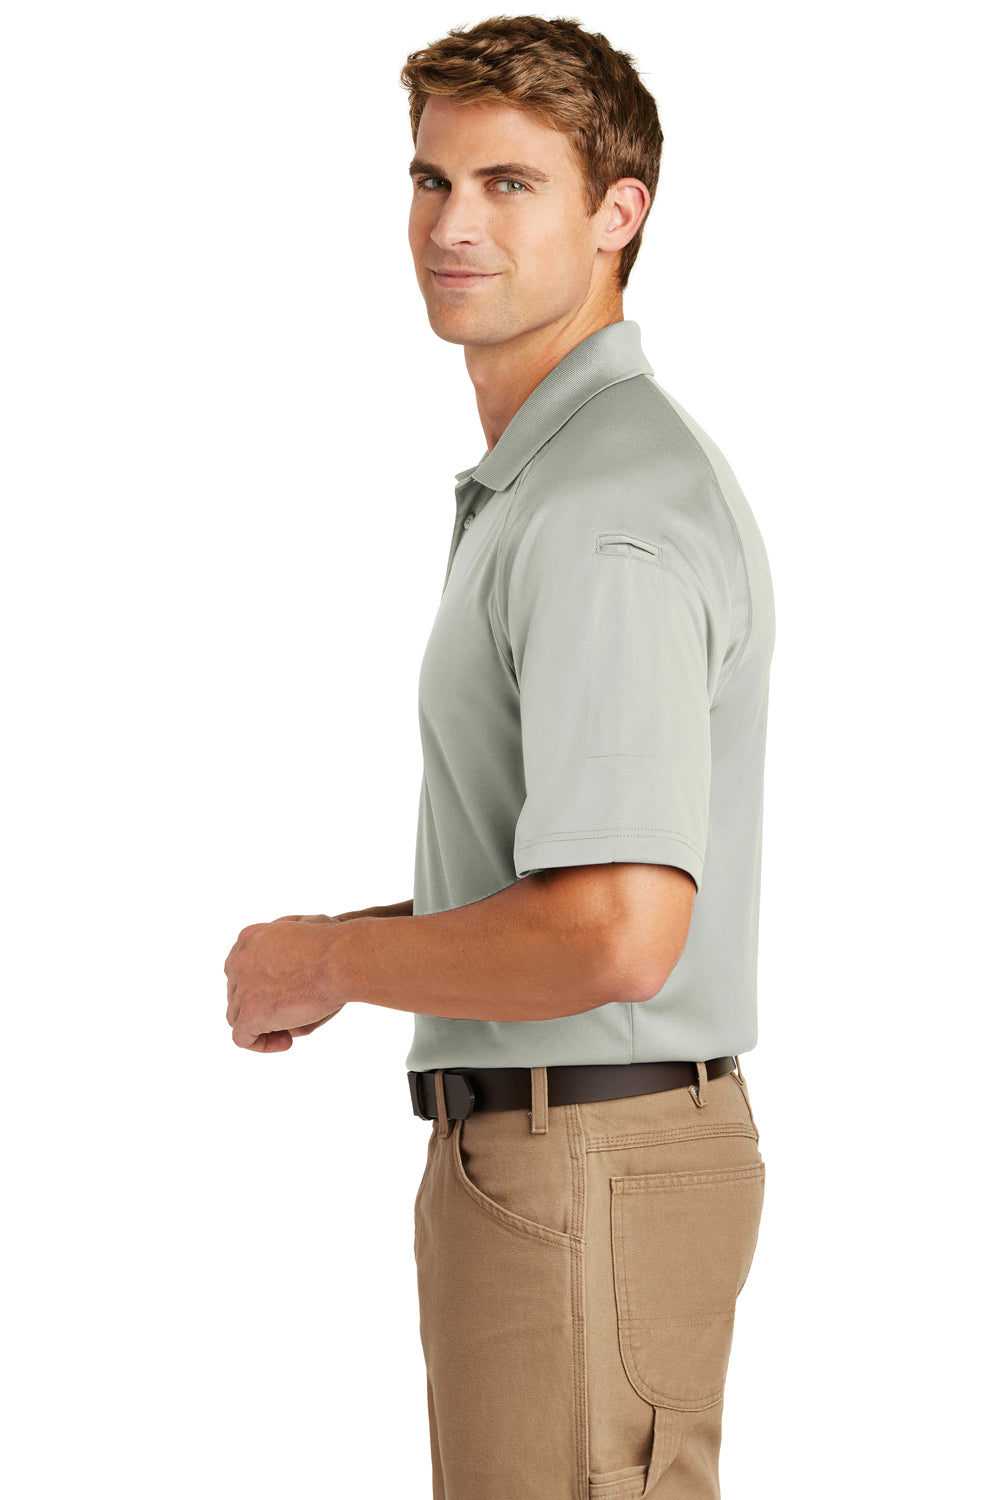 CornerStone CS410 Mens Select Tactical Moisture Wicking Short Sleeve Polo Shirt Light Grey Side